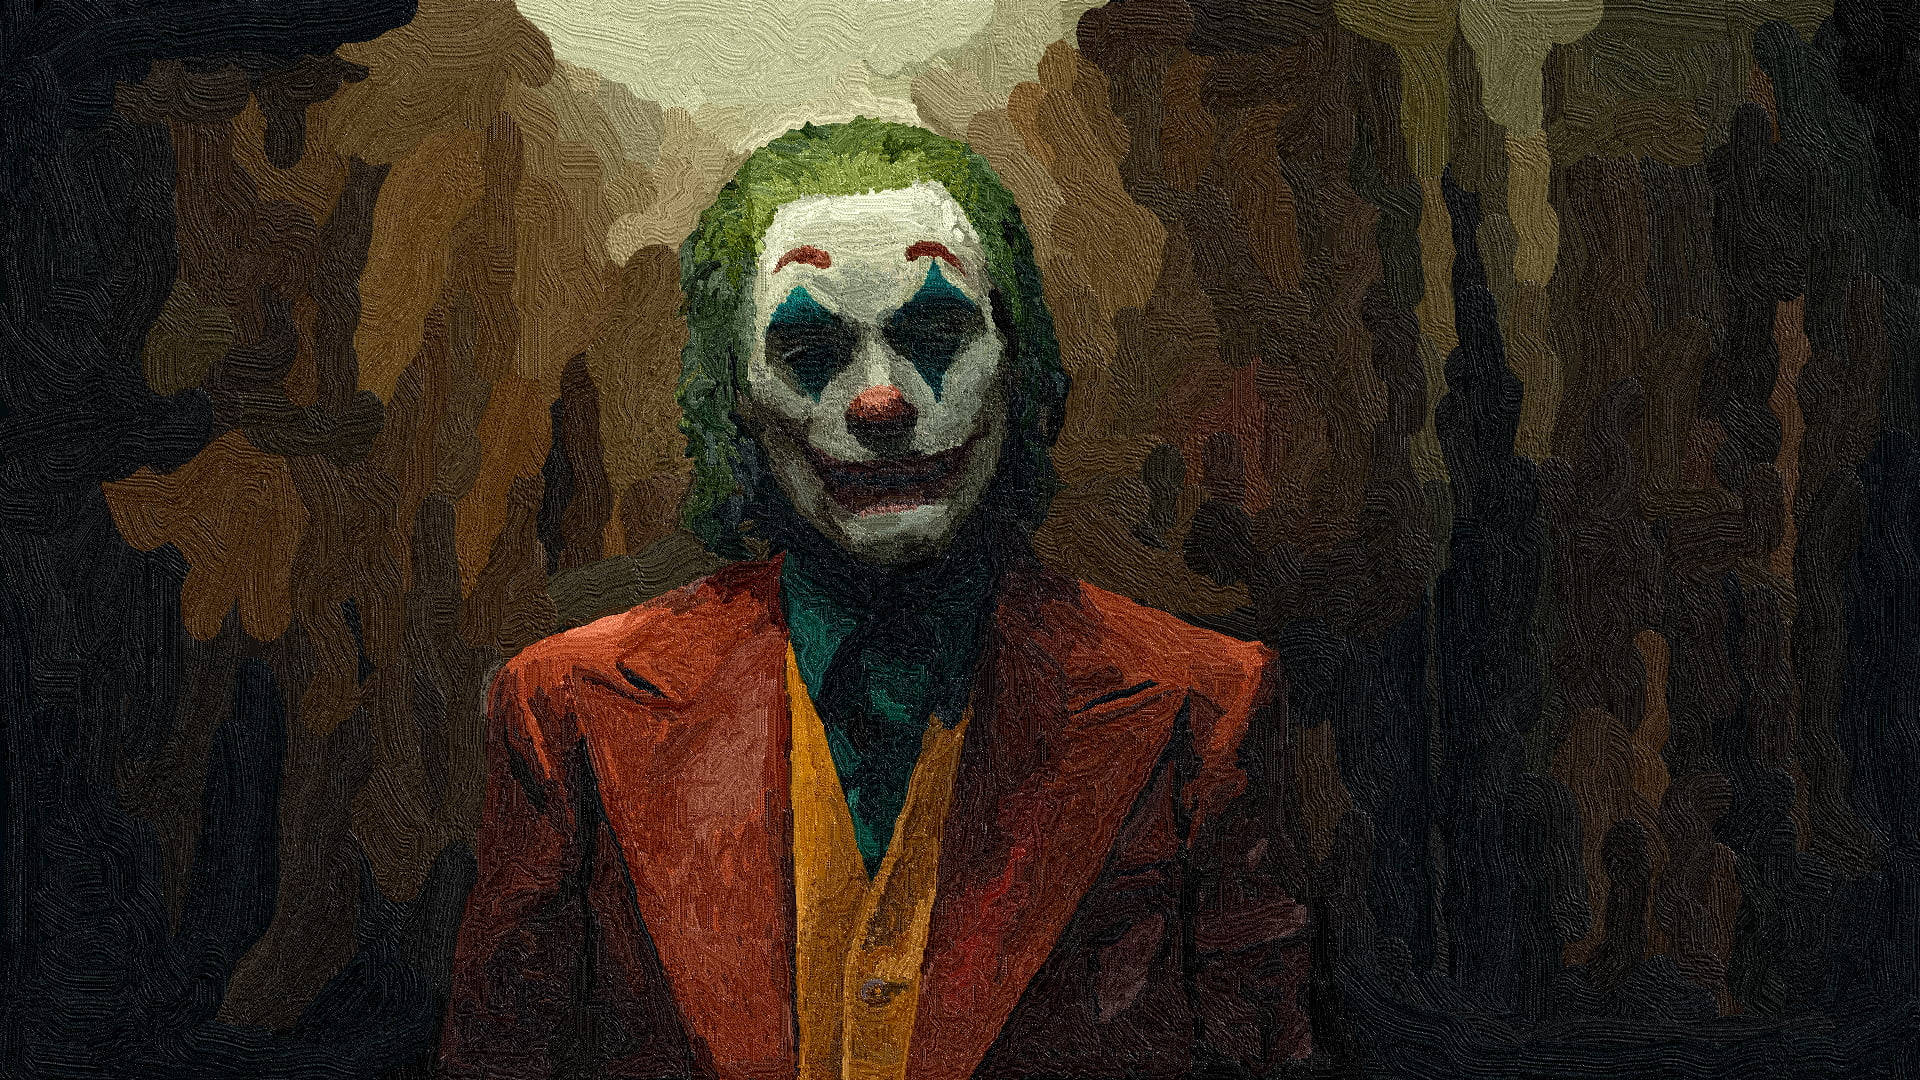 Textured Joker 2020 Painting Wallpaper